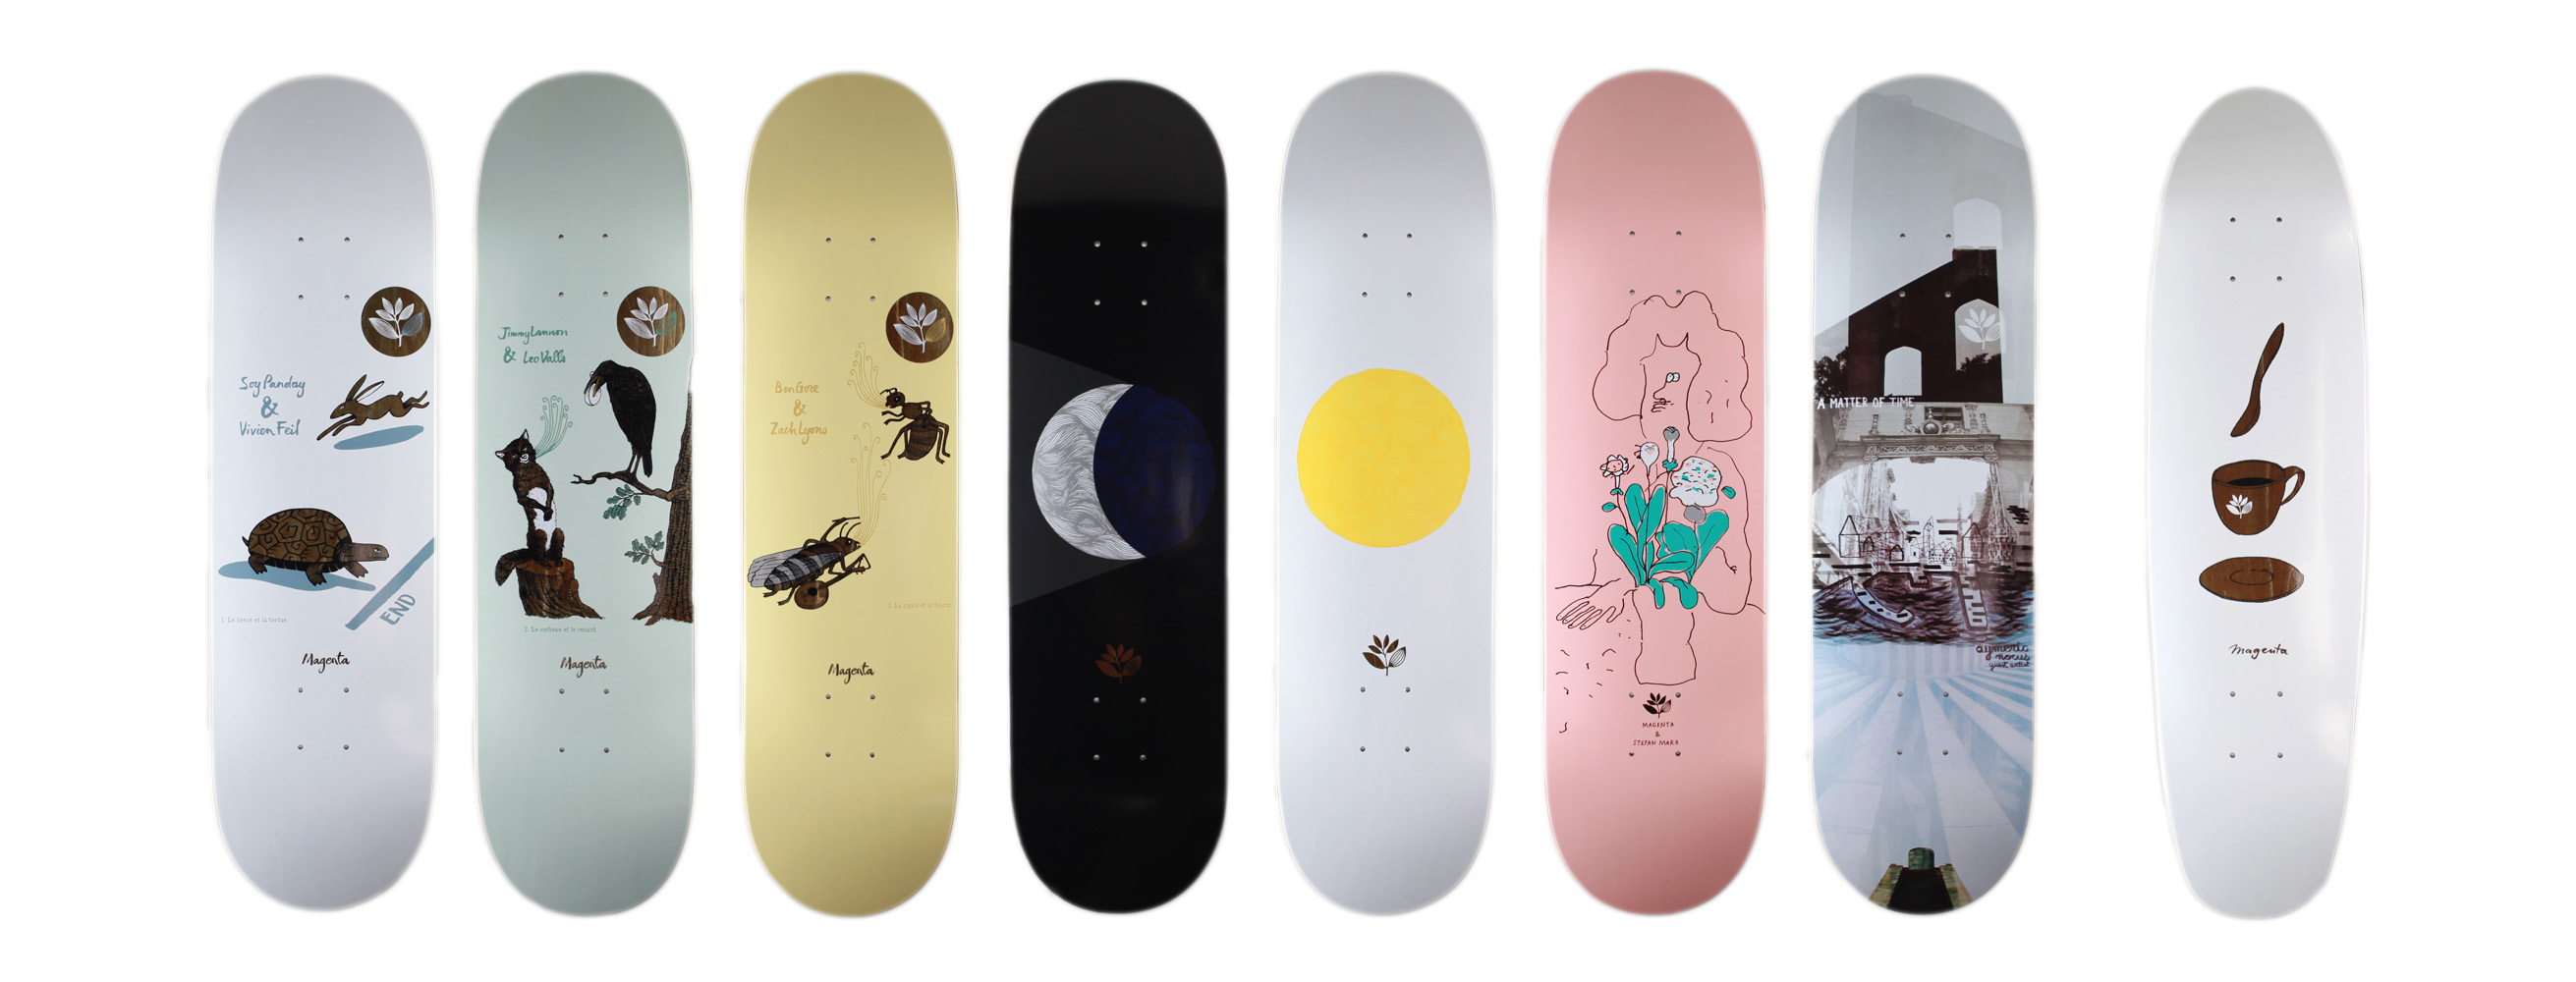 Belofte Vruchtbaar Beschrijving SUMMER 16 Release - Magenta Skateboards